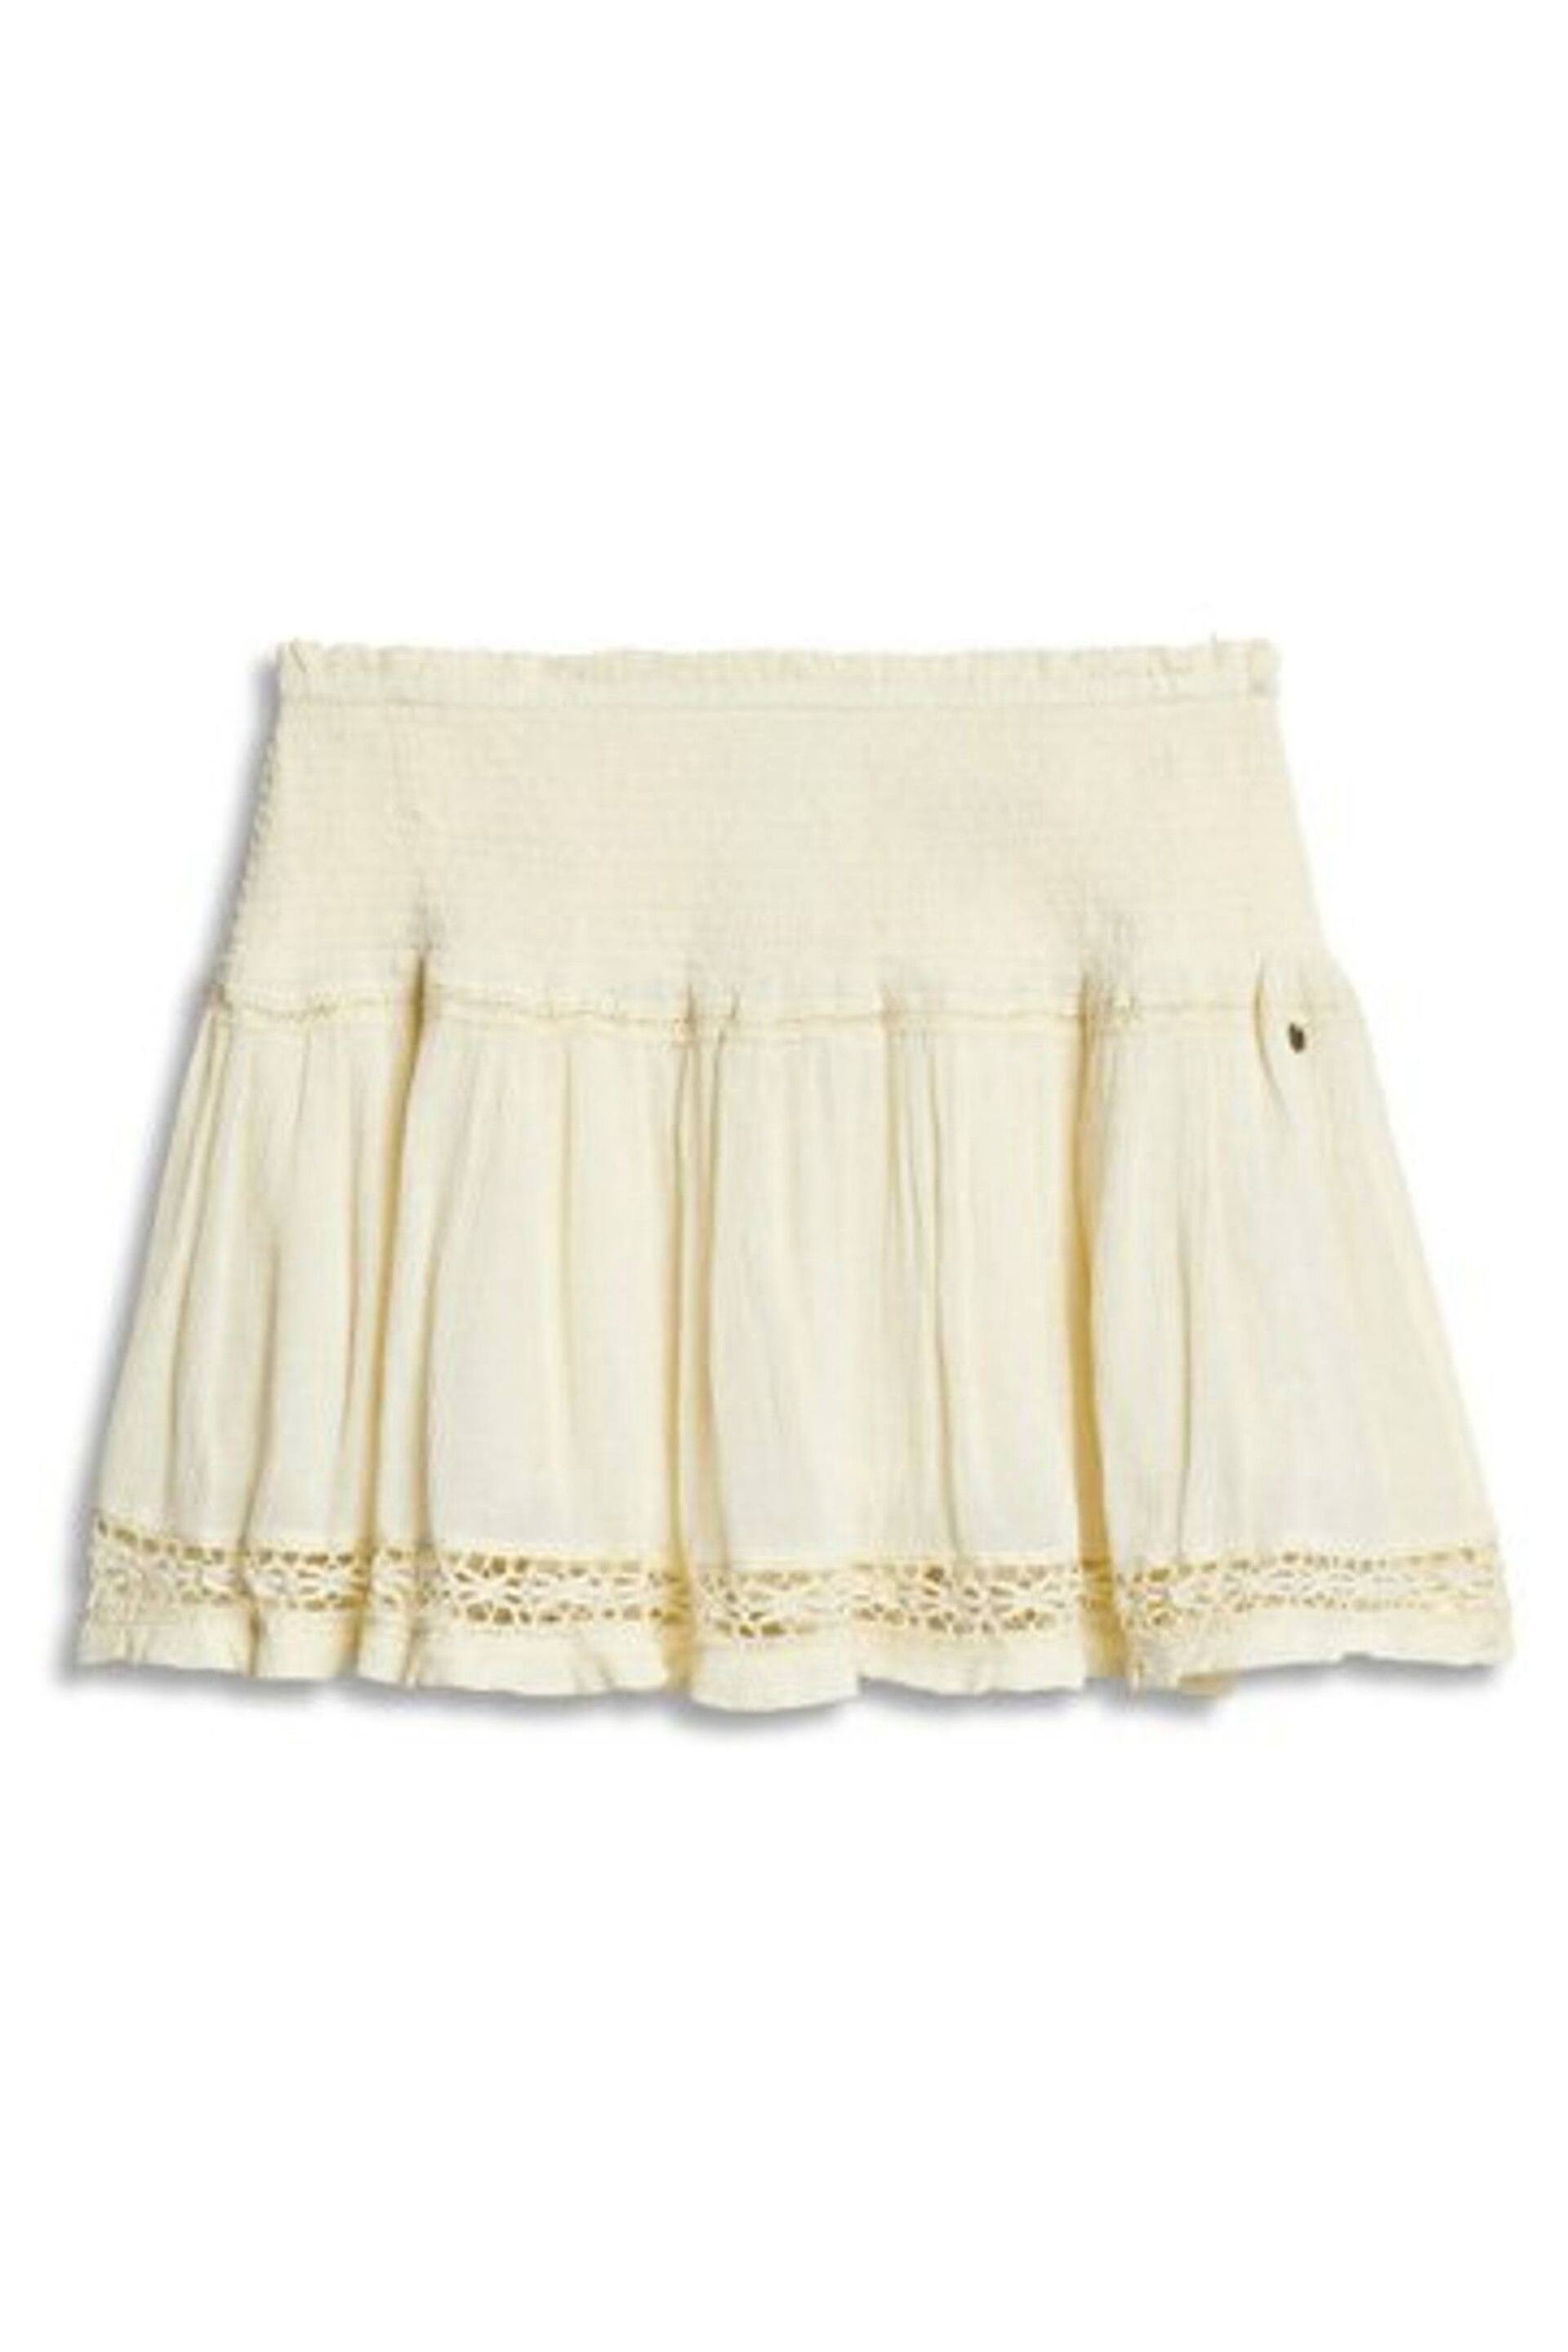 Superdry Cream Vintage Alana Skirt - Image 4 of 4